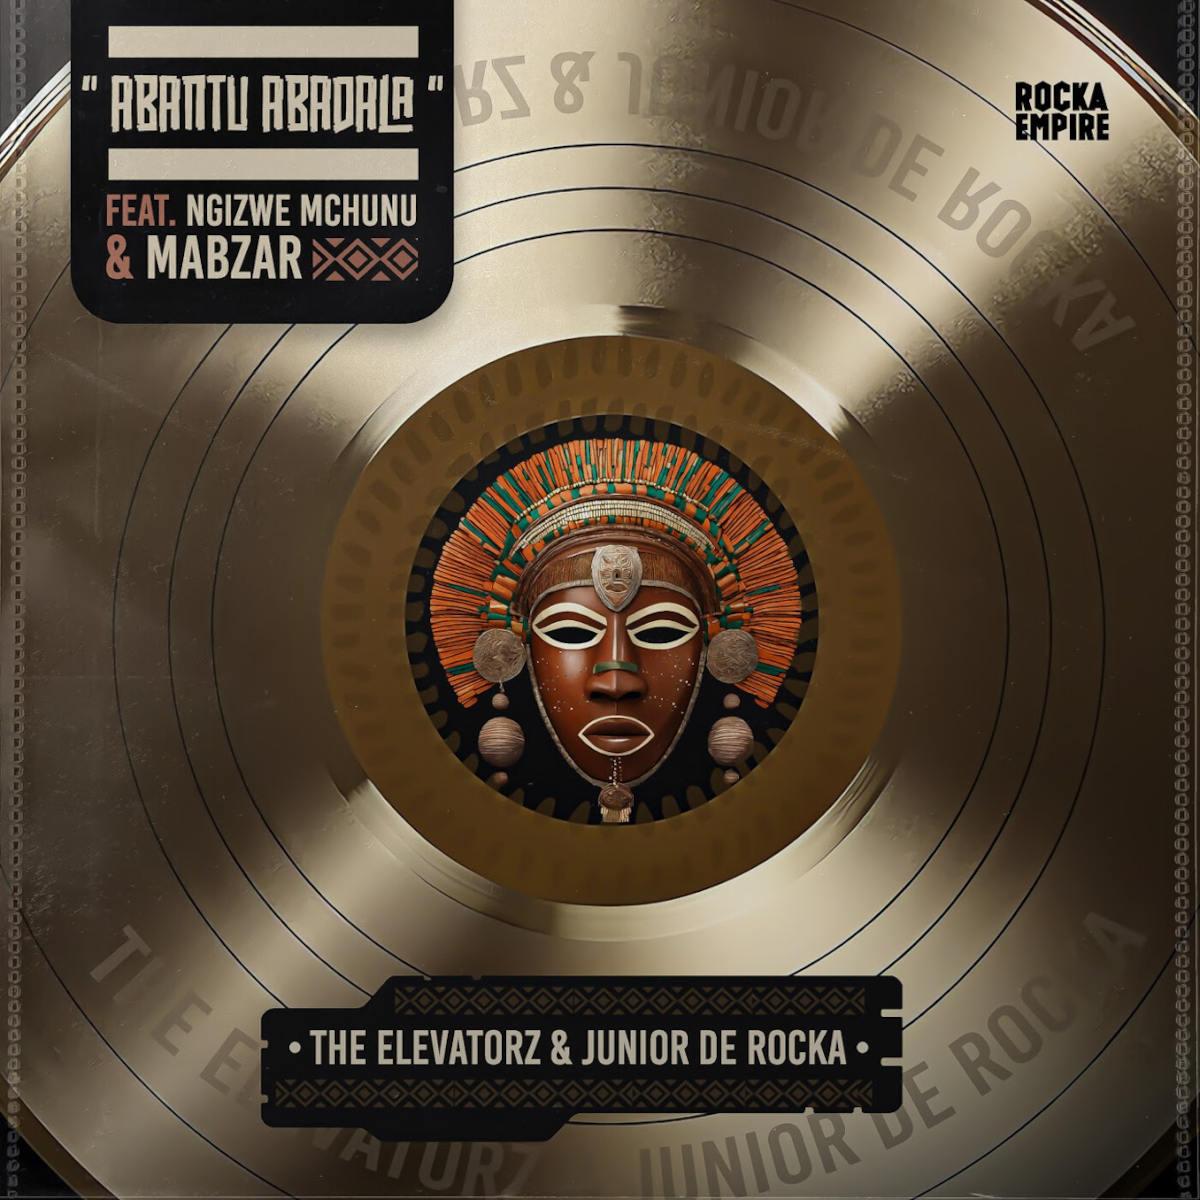 Junior De Rocka & The Elevatorz – Abantu Abadala (feat. Ngizwe Mchunu & MaBzar)